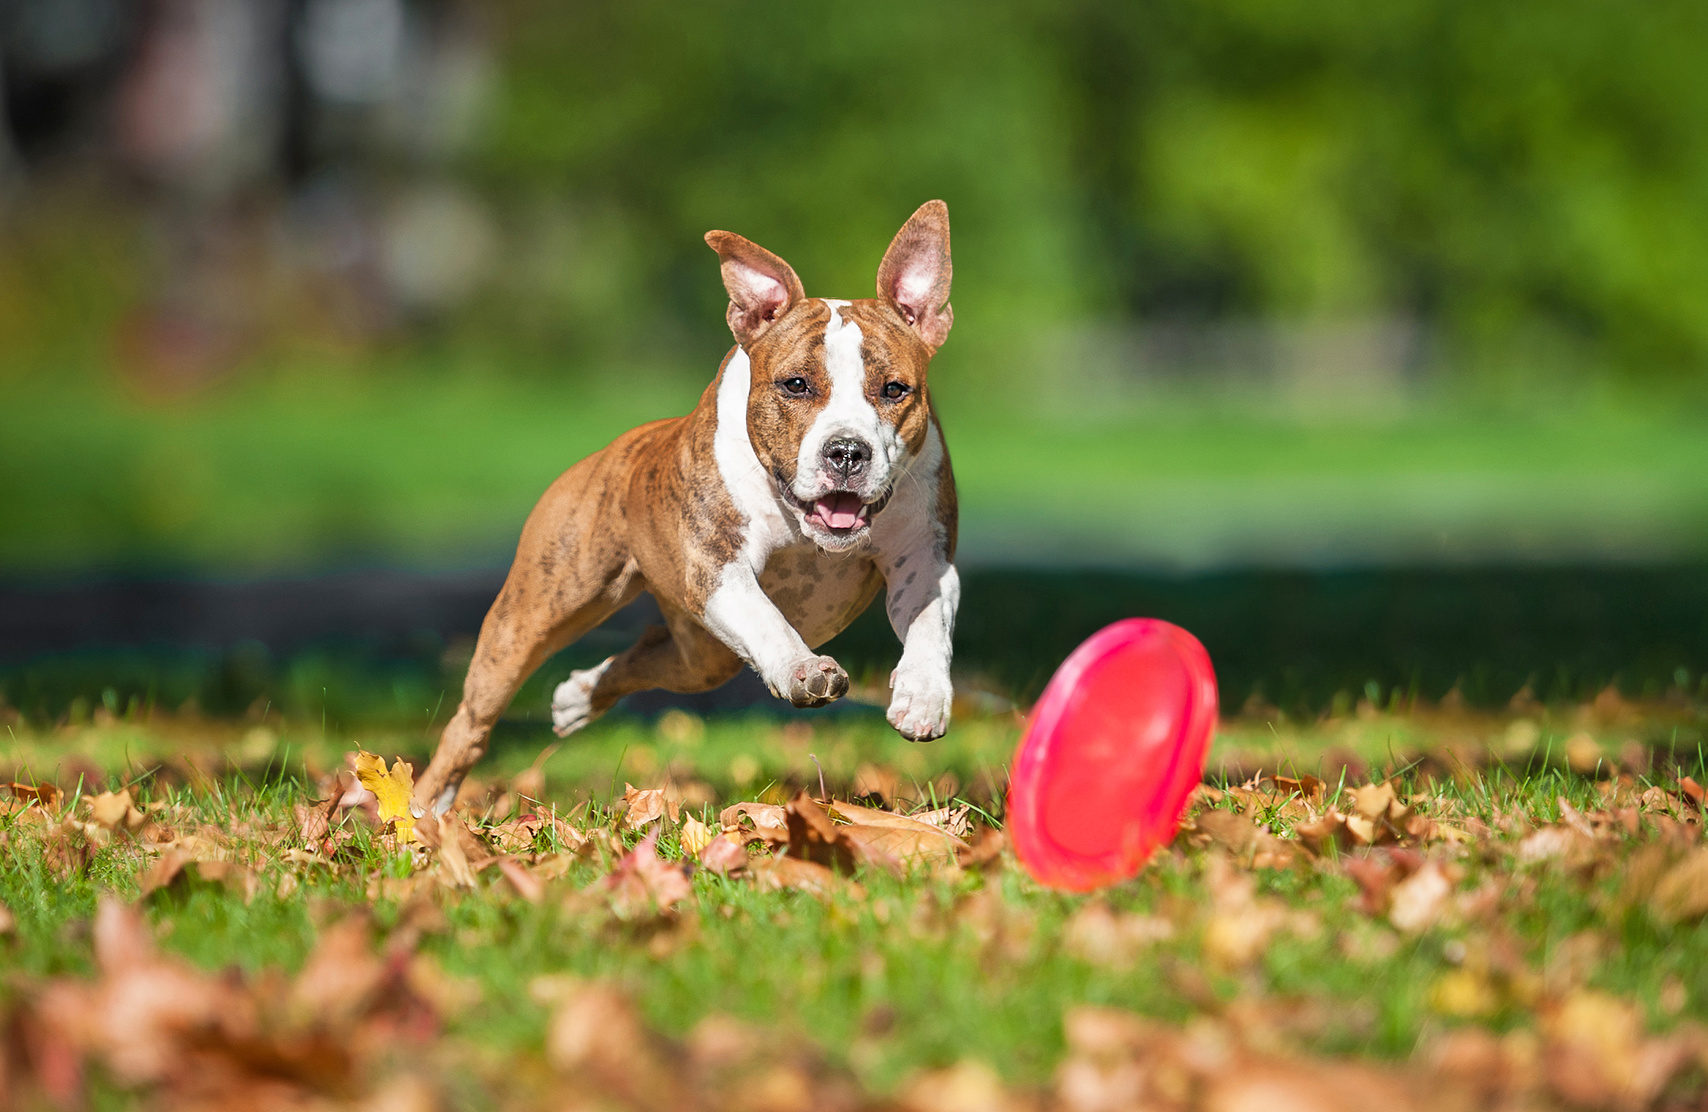 American Staffordshire terrier court pour attraper un frisbee rouge, un sport canin